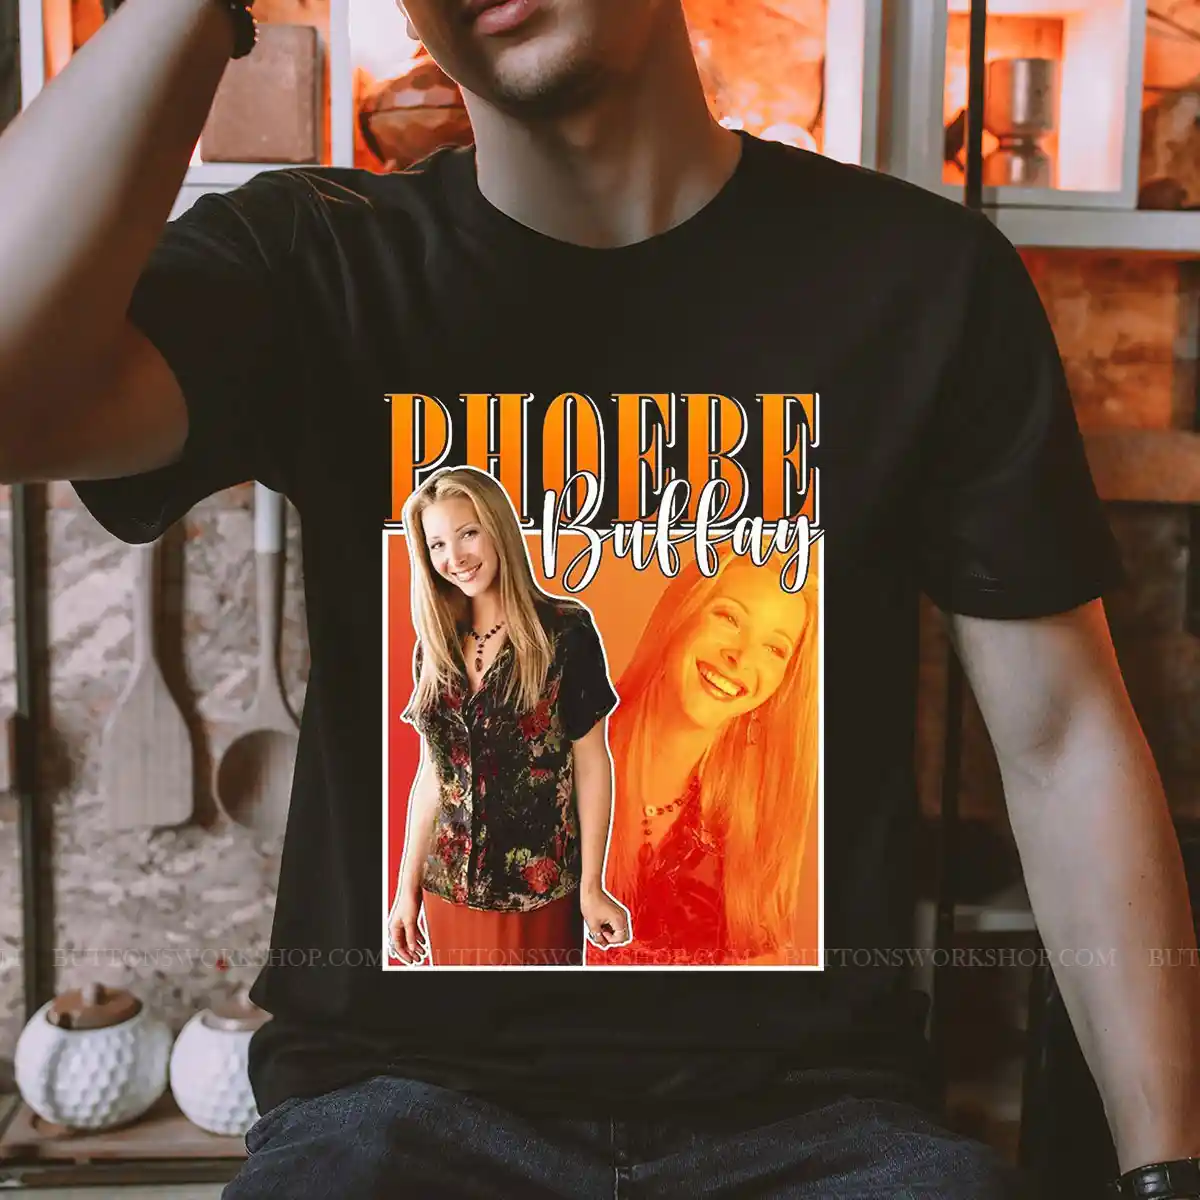 Phoebe Buffay Shirt Unisex Tshirt